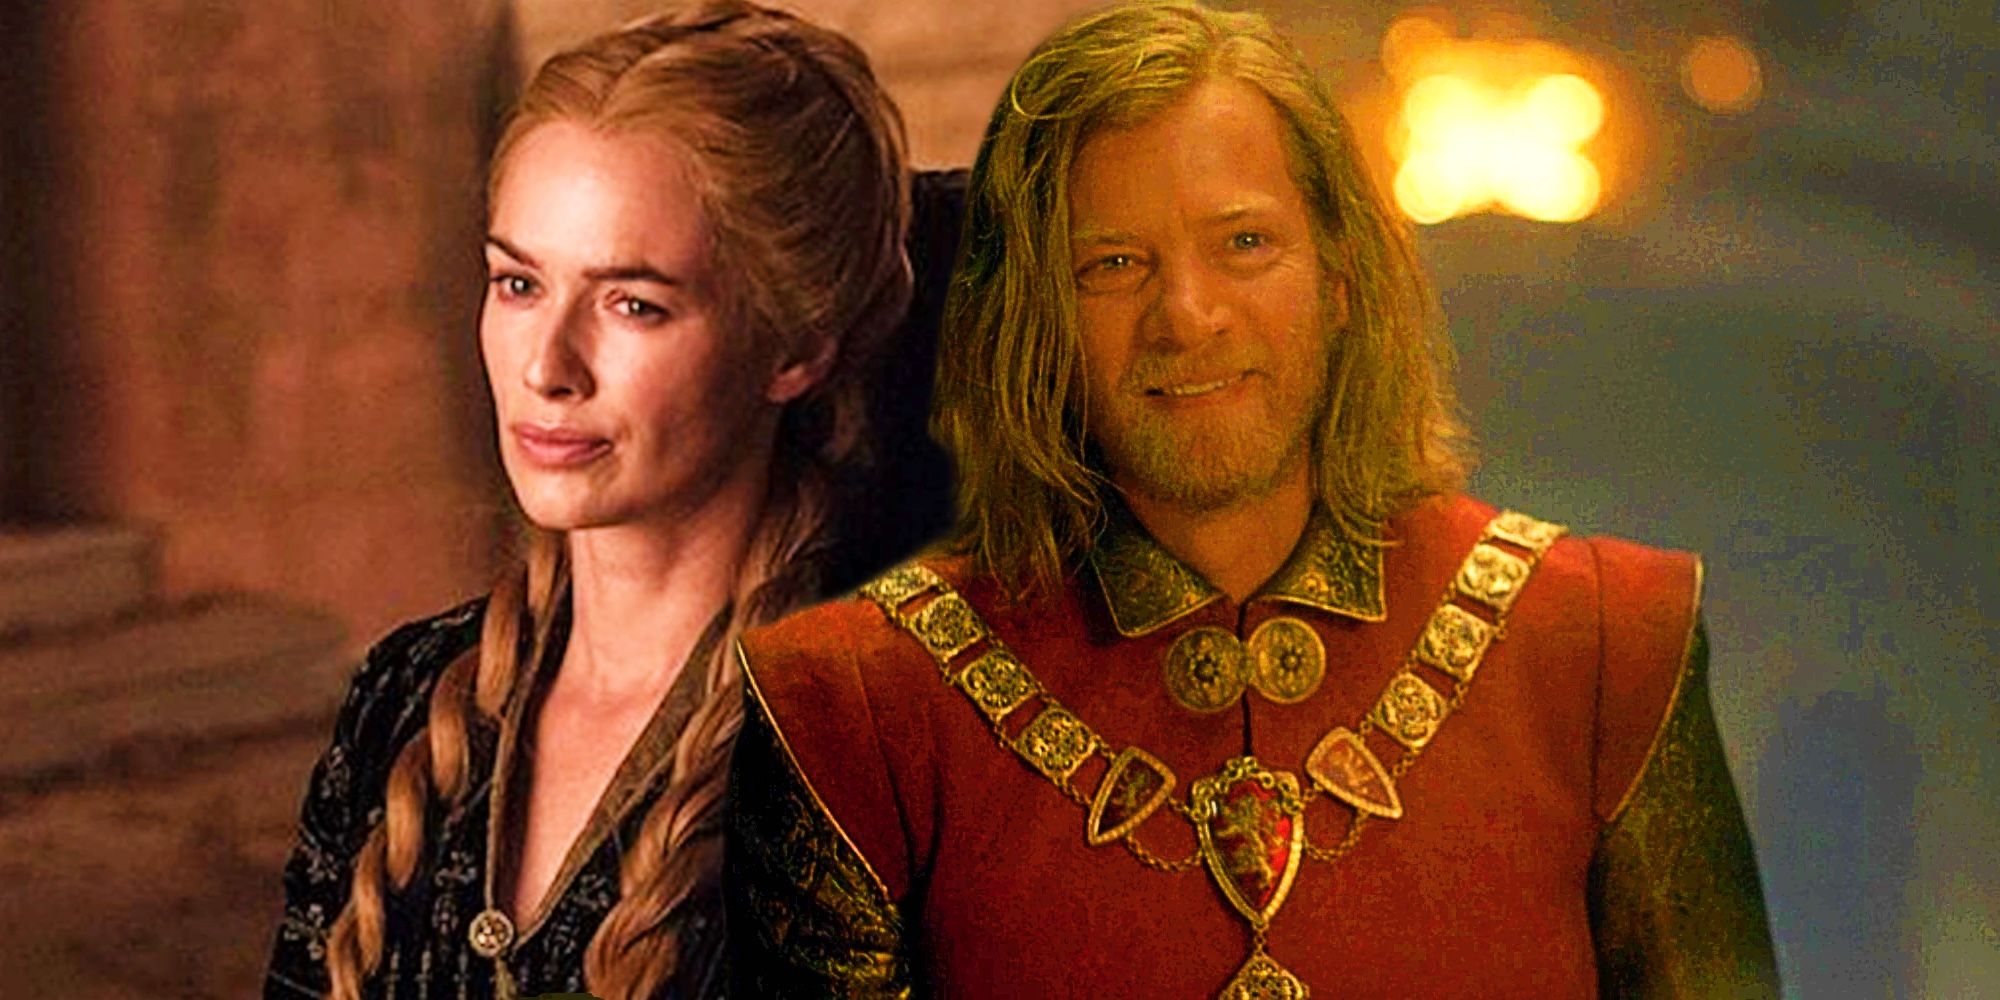 Jefferson Hall as Jason Lannister and Lena Headey as Cersei Lannister